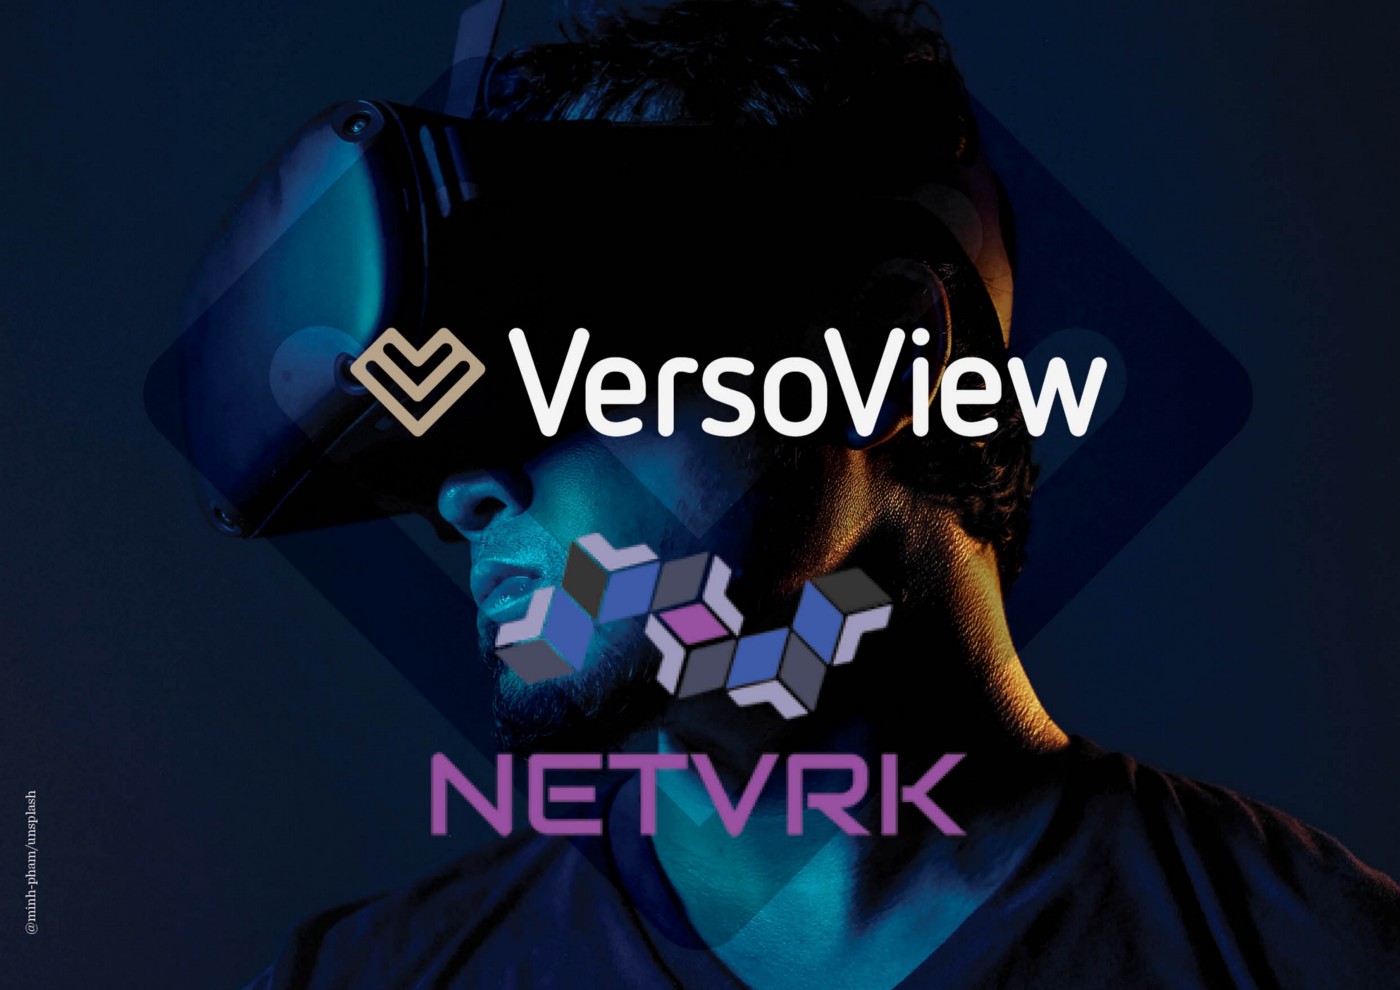 VersoView Netvrk